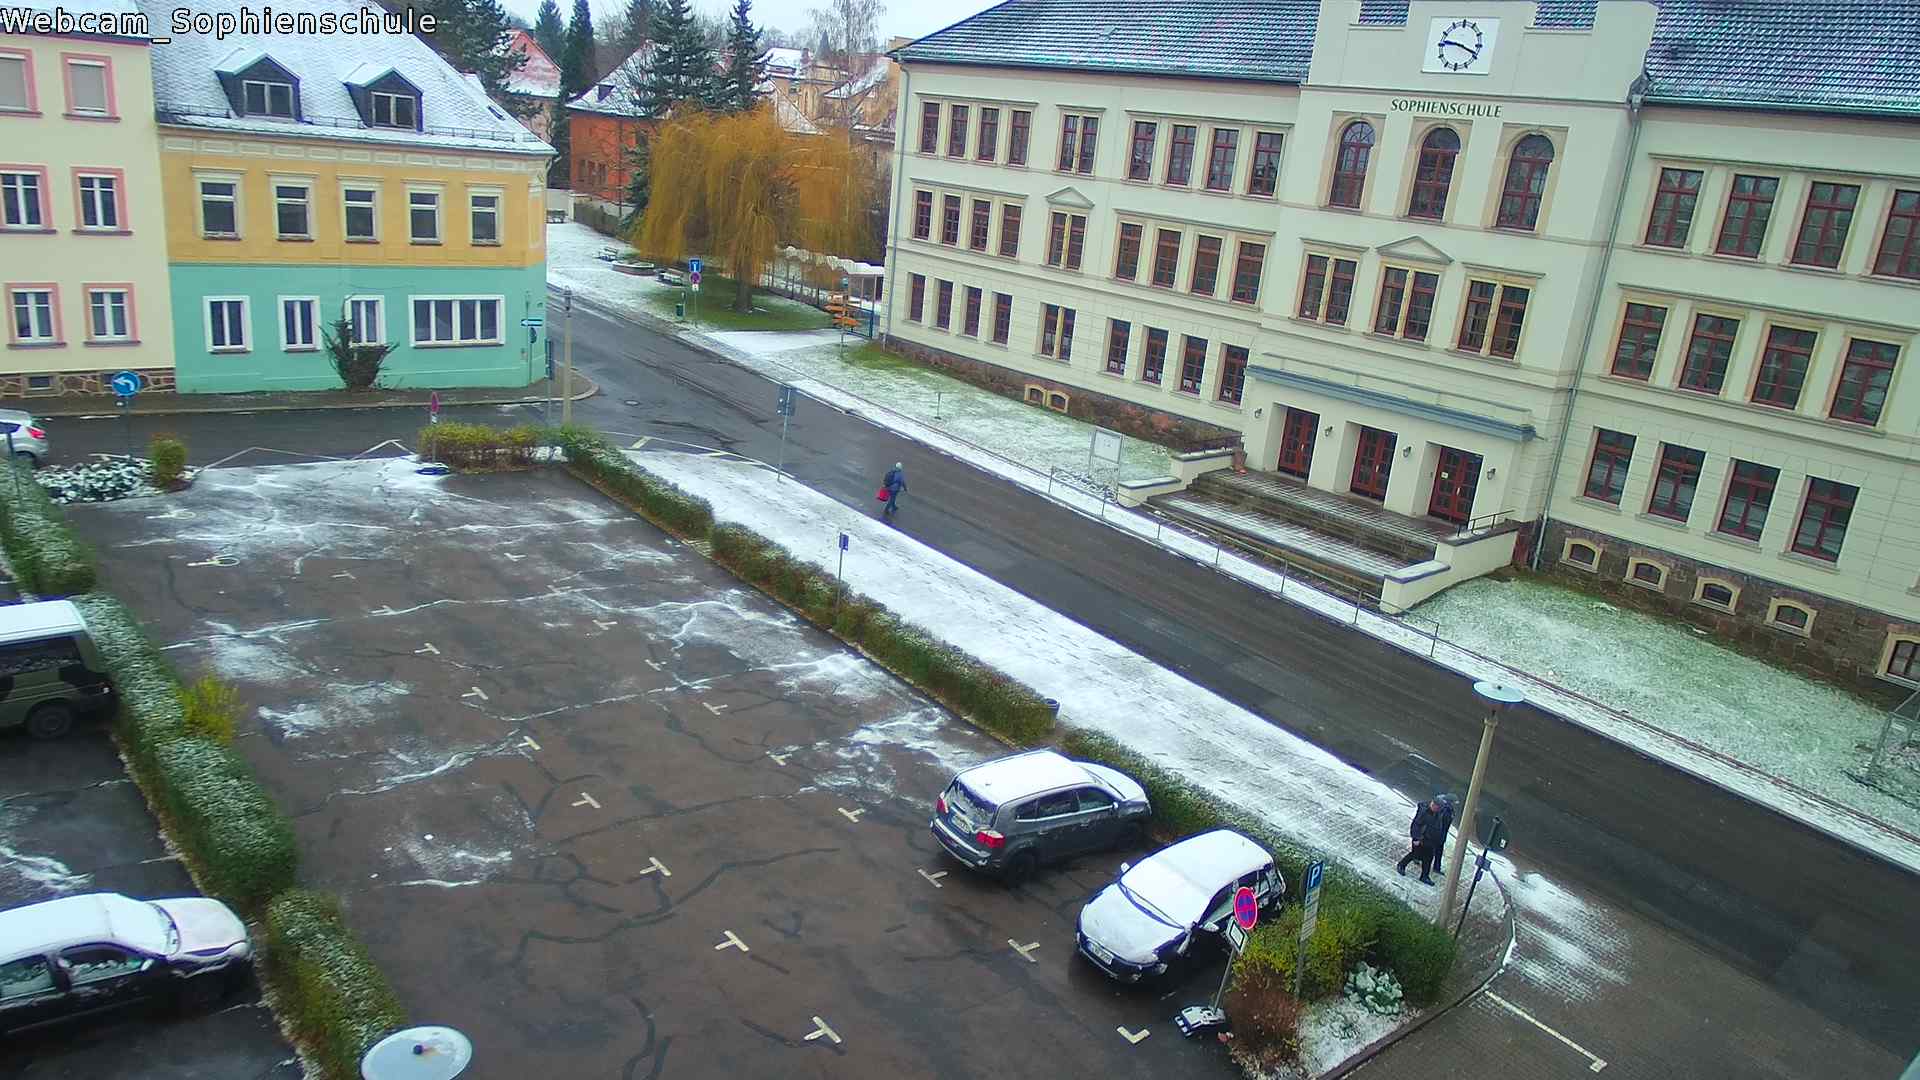 Webcam Sophienschule Colditz